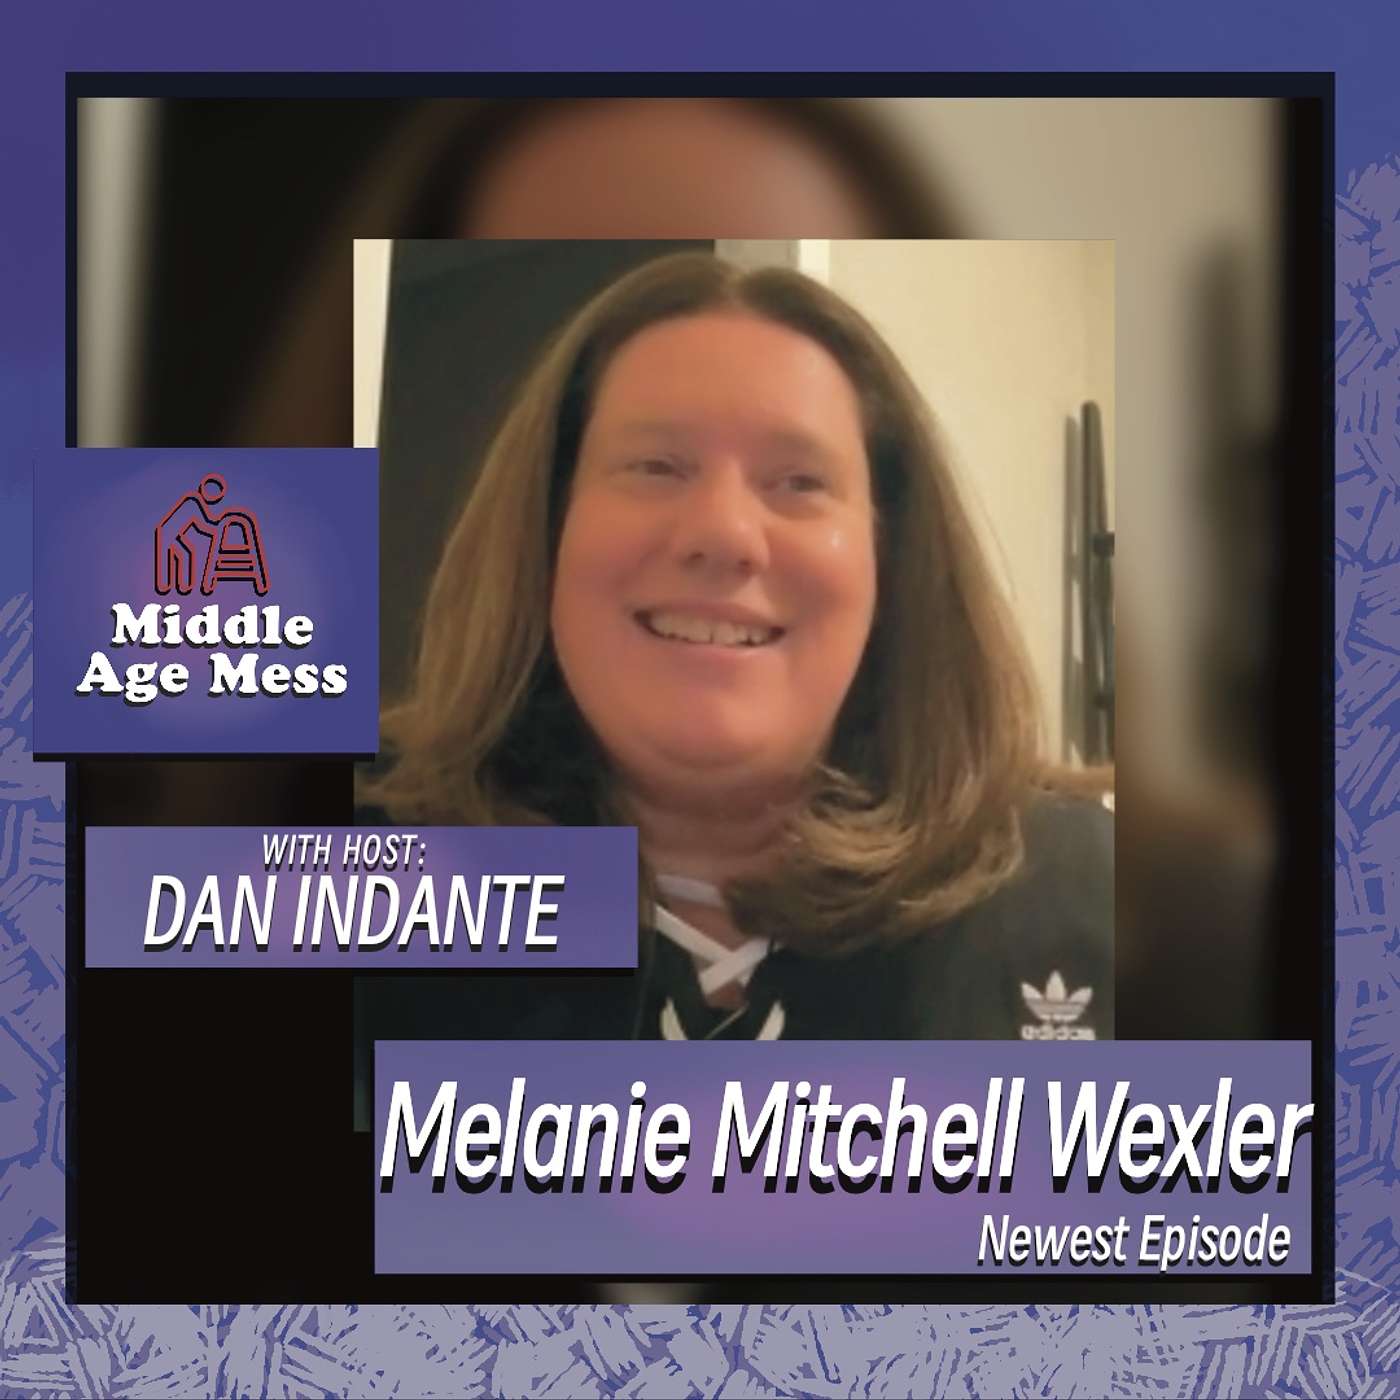 Middle Age Mess, Episode 4 - Melanie Mitchell Wexler